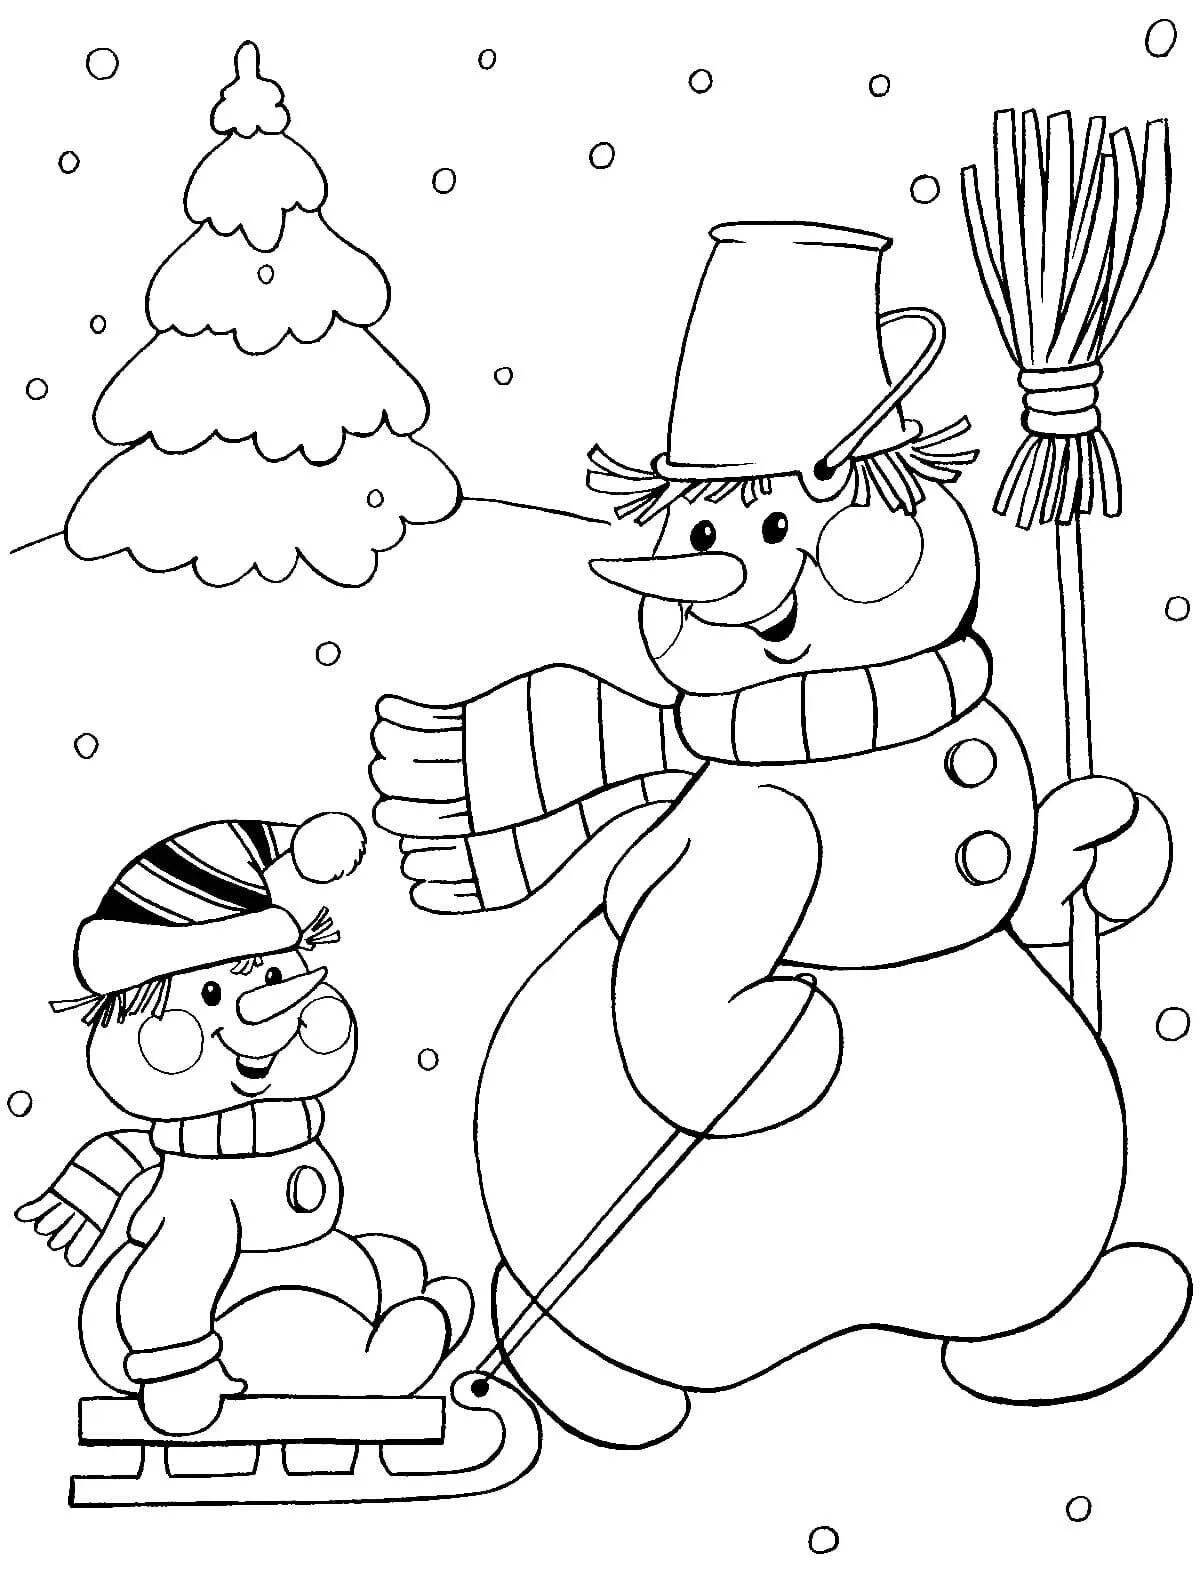 Funny children's coloring snowman